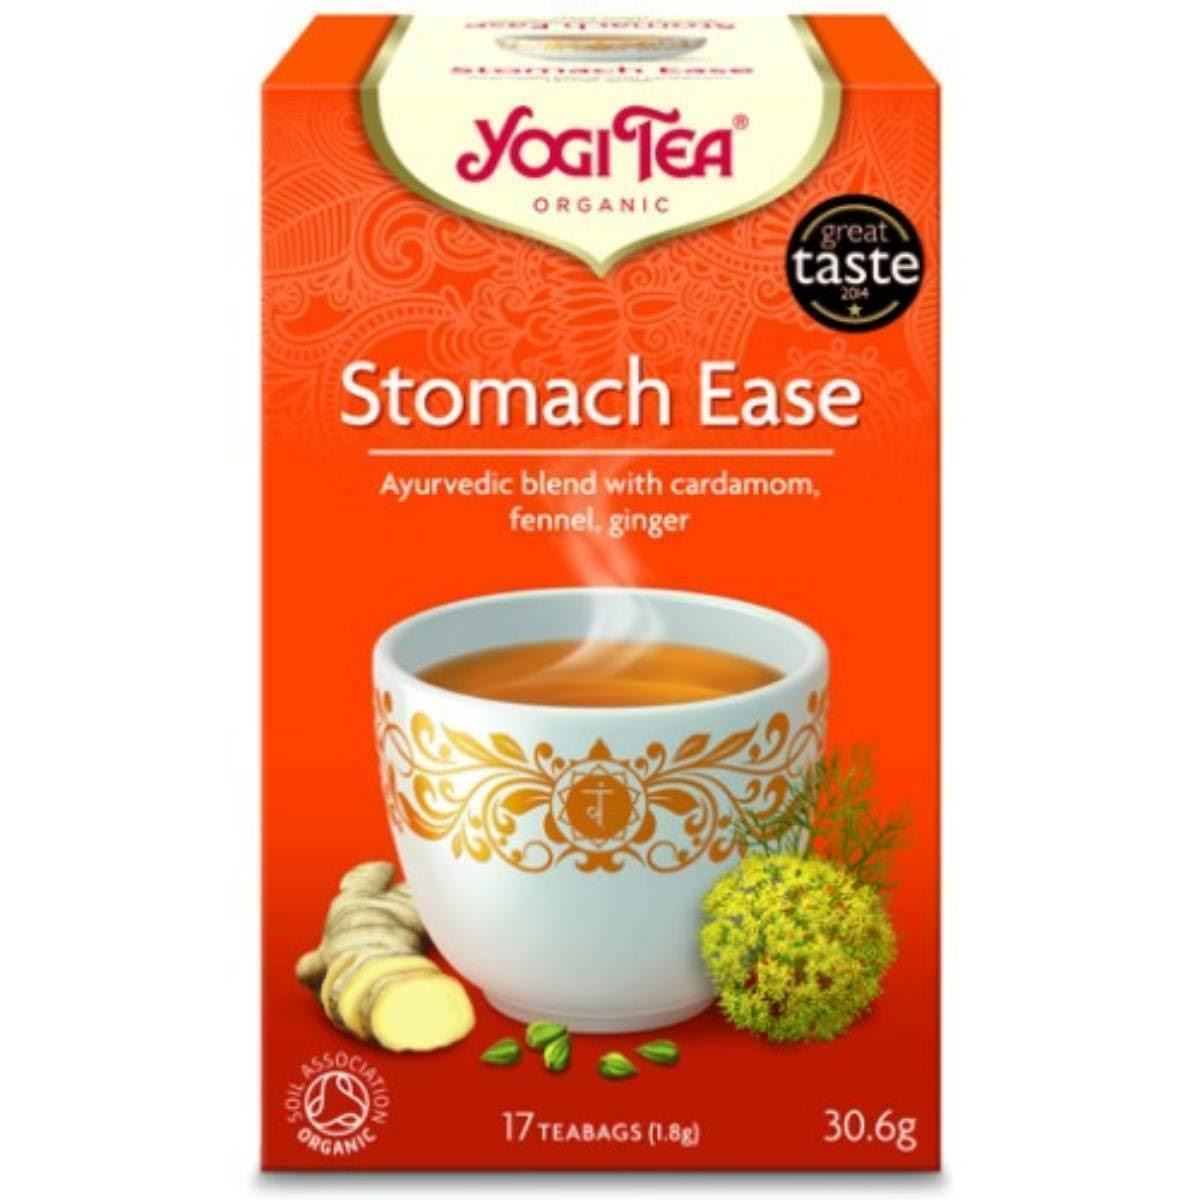 Yogi Tea Organic Stomach Ease Tea - 17 Teabags, 30.6g